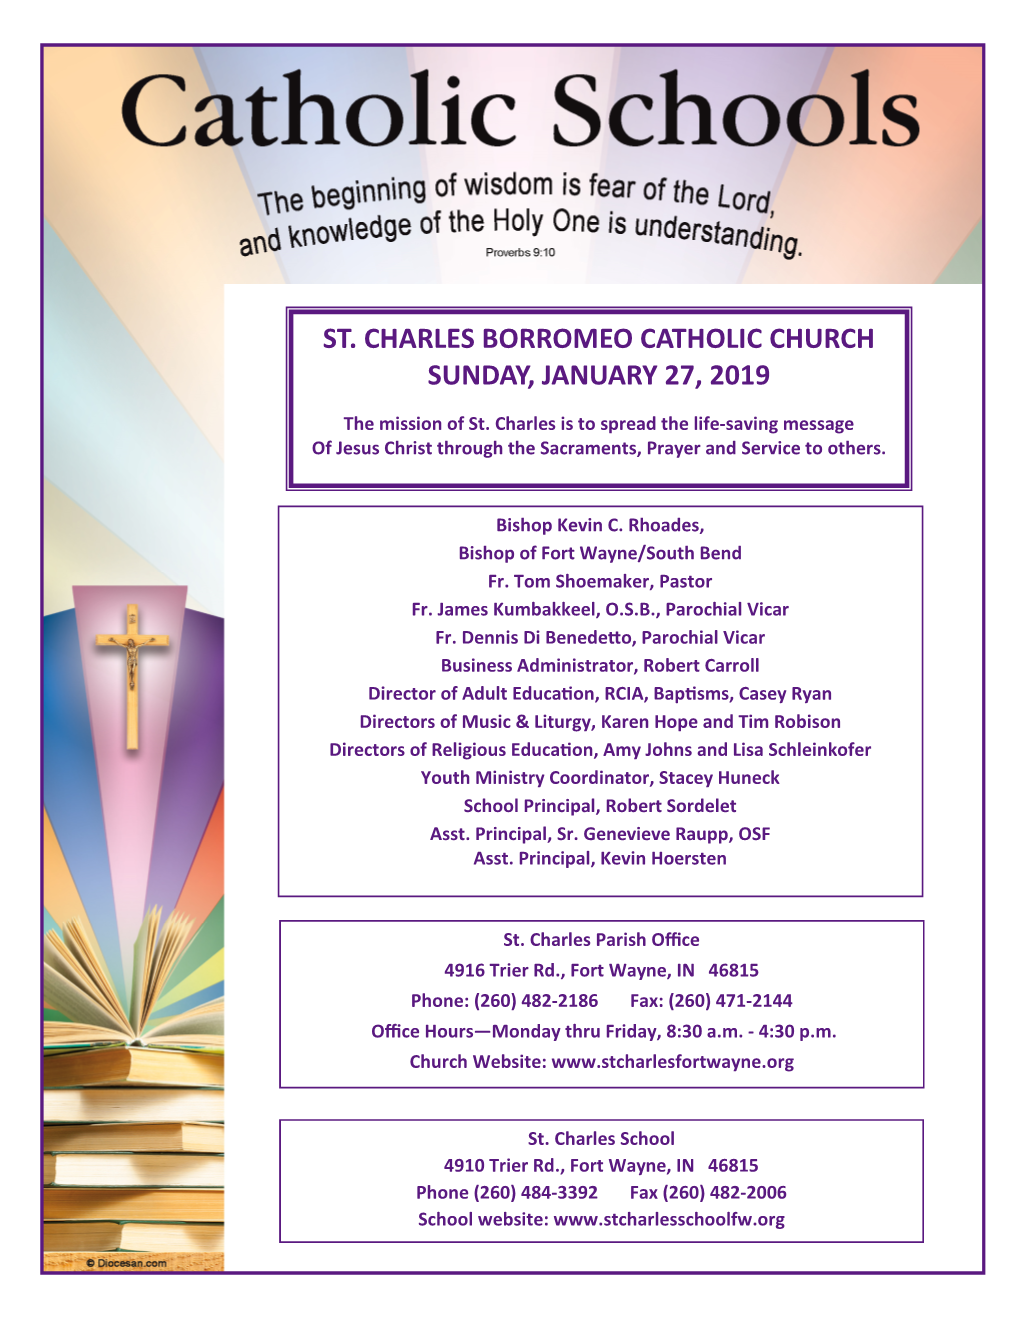 St. Charles Borromeo Catholic Church Sunday, January 27, 2019